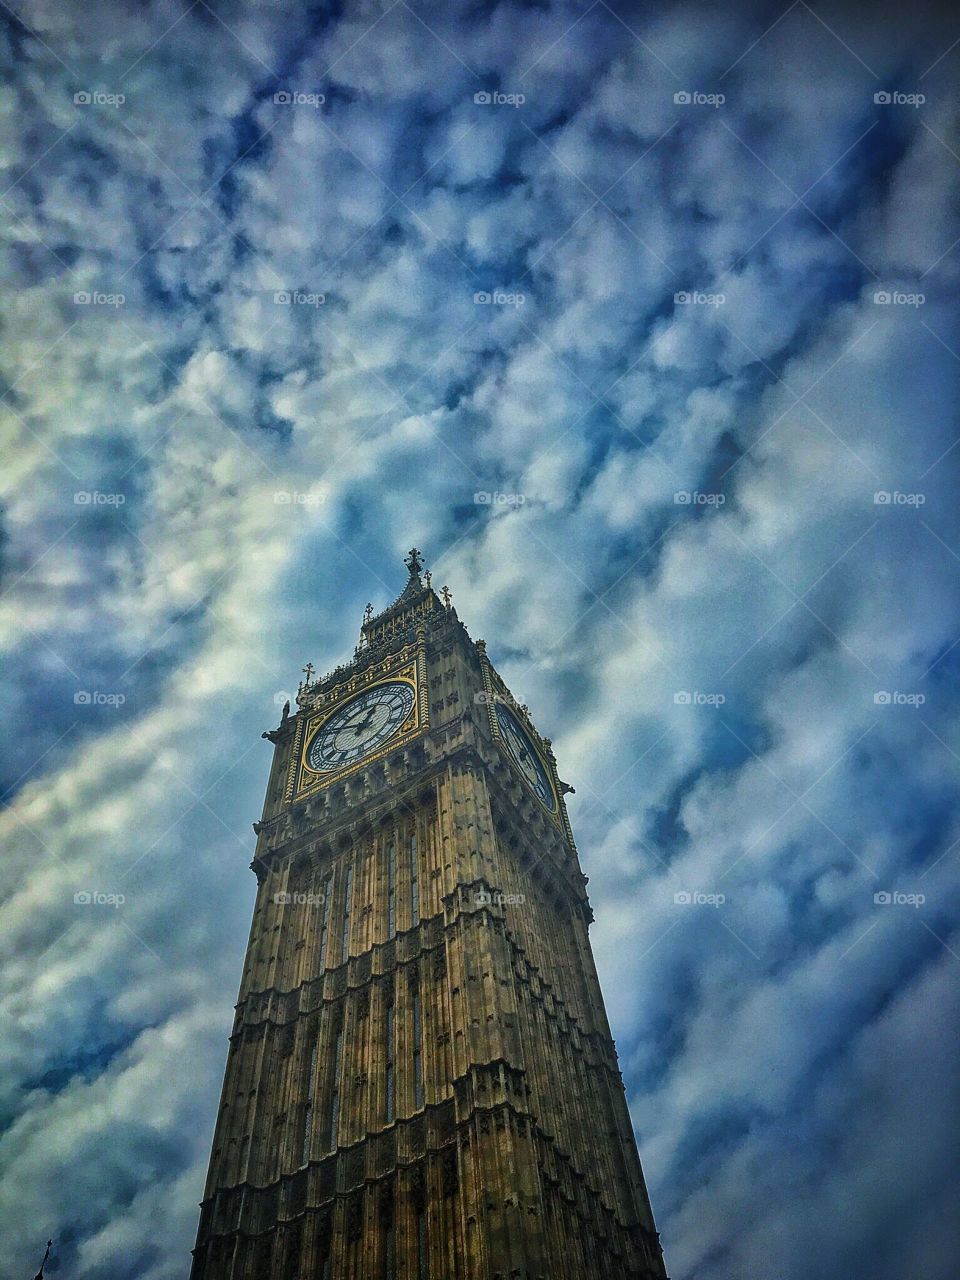 Clouds over Big Ben London